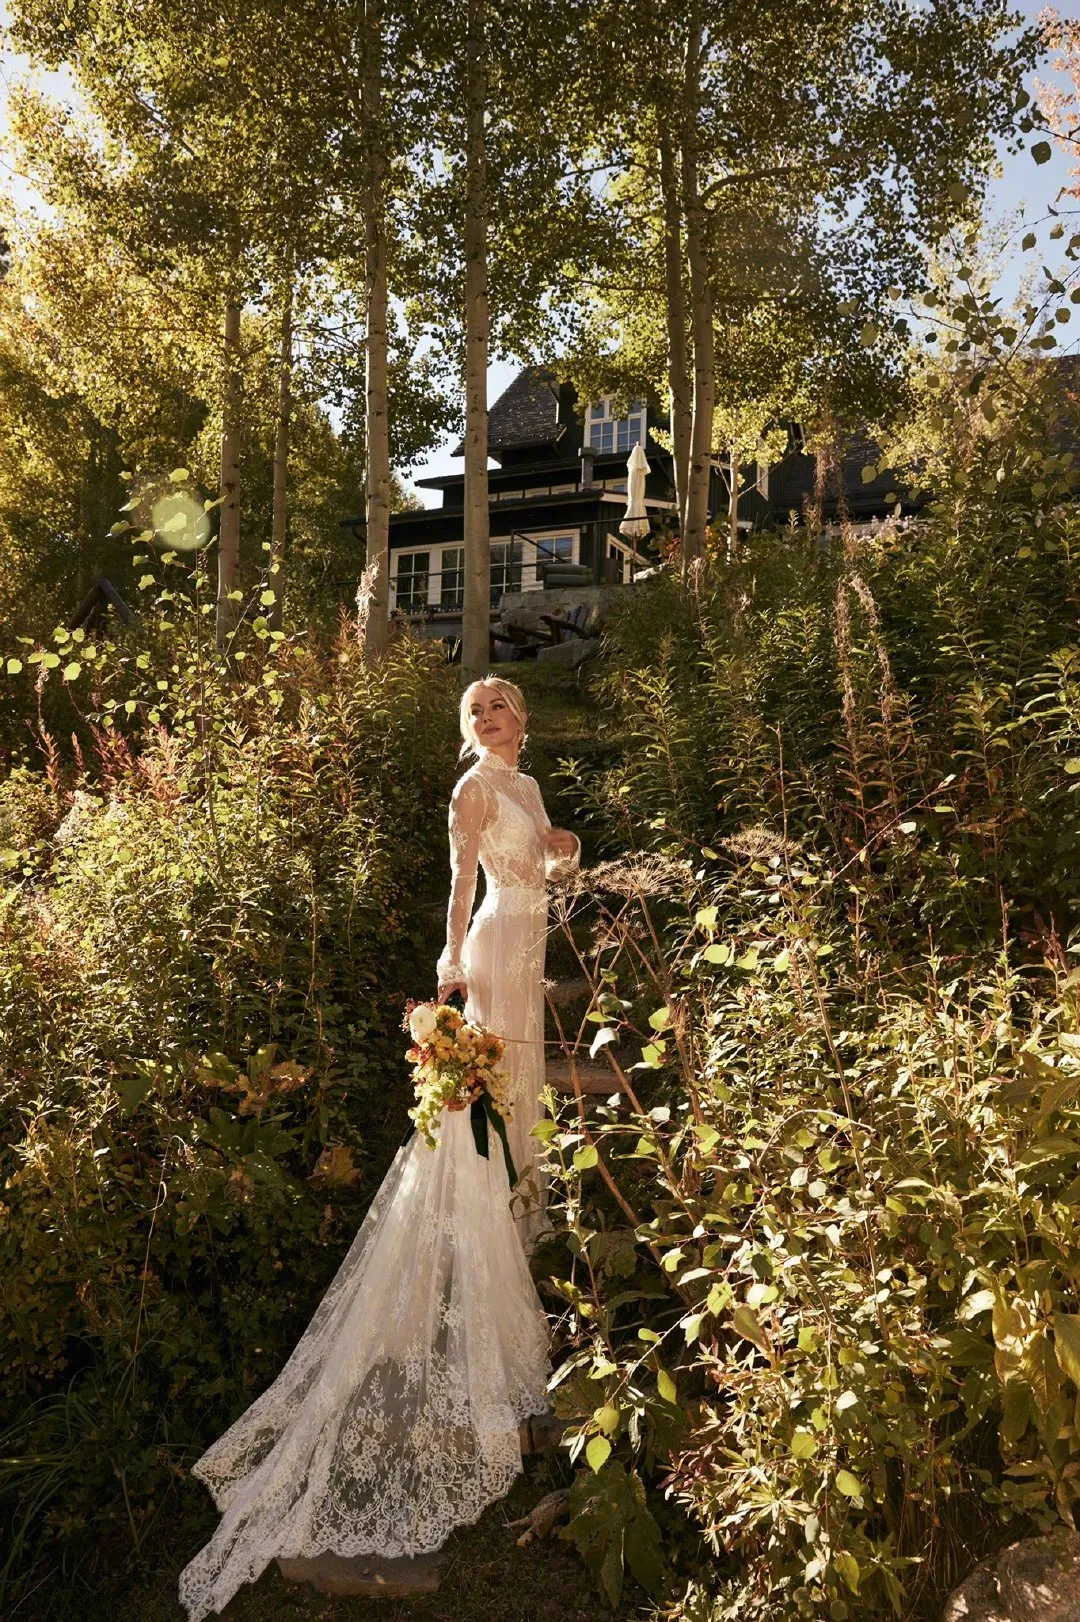 James Gunn and Jennifer Holland wedding scene photo | FMV6